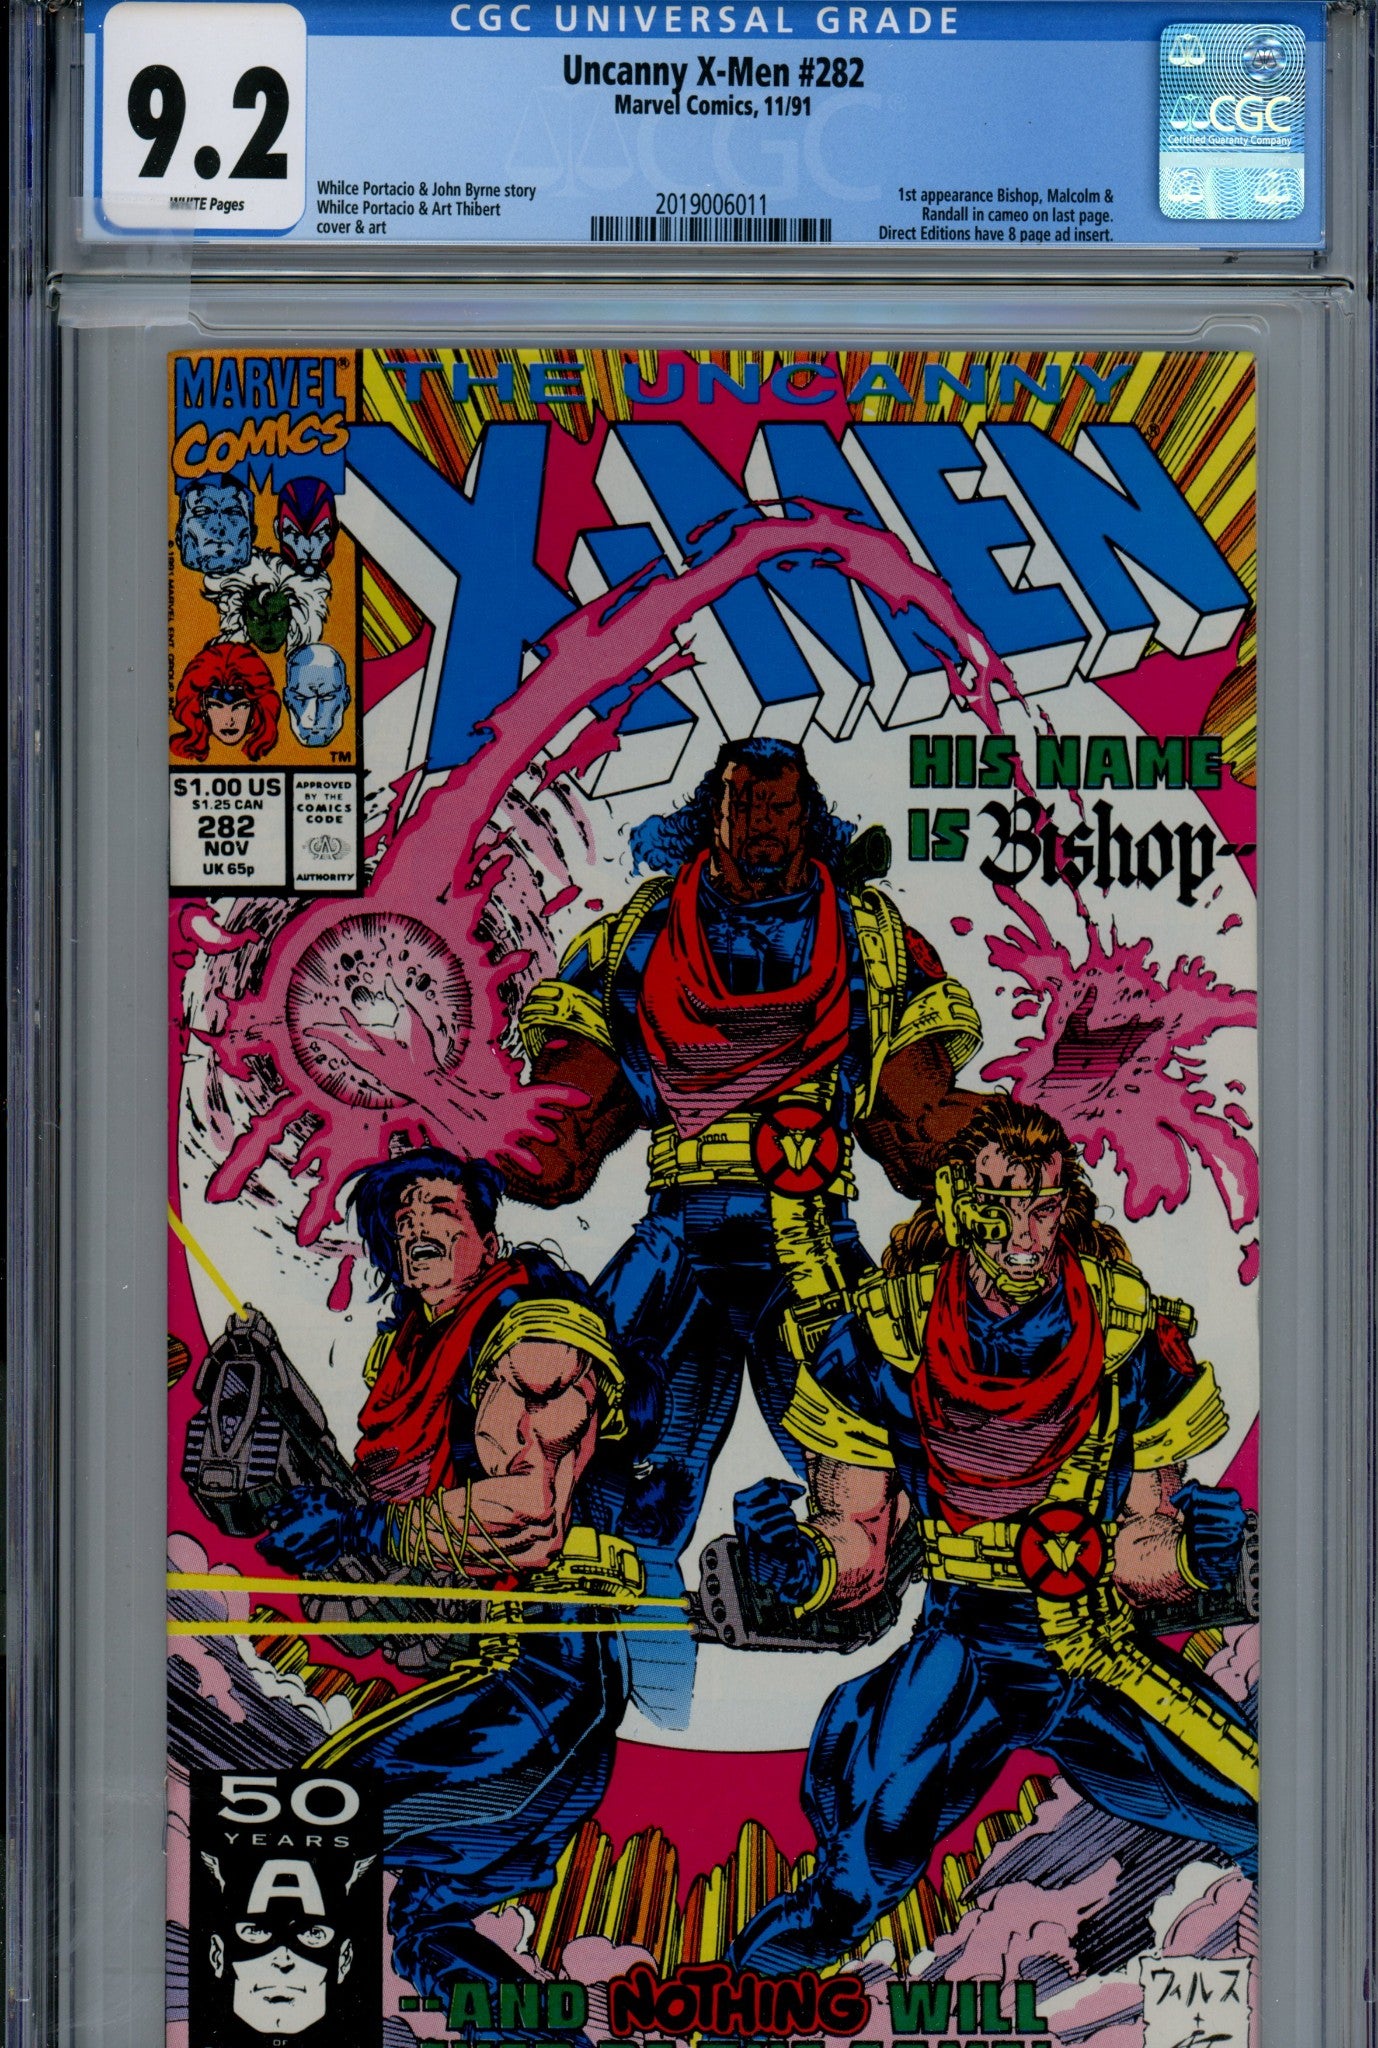 The Uncanny X-Men Vol 1 282 CGC 9.2 (NM-) (1991) 